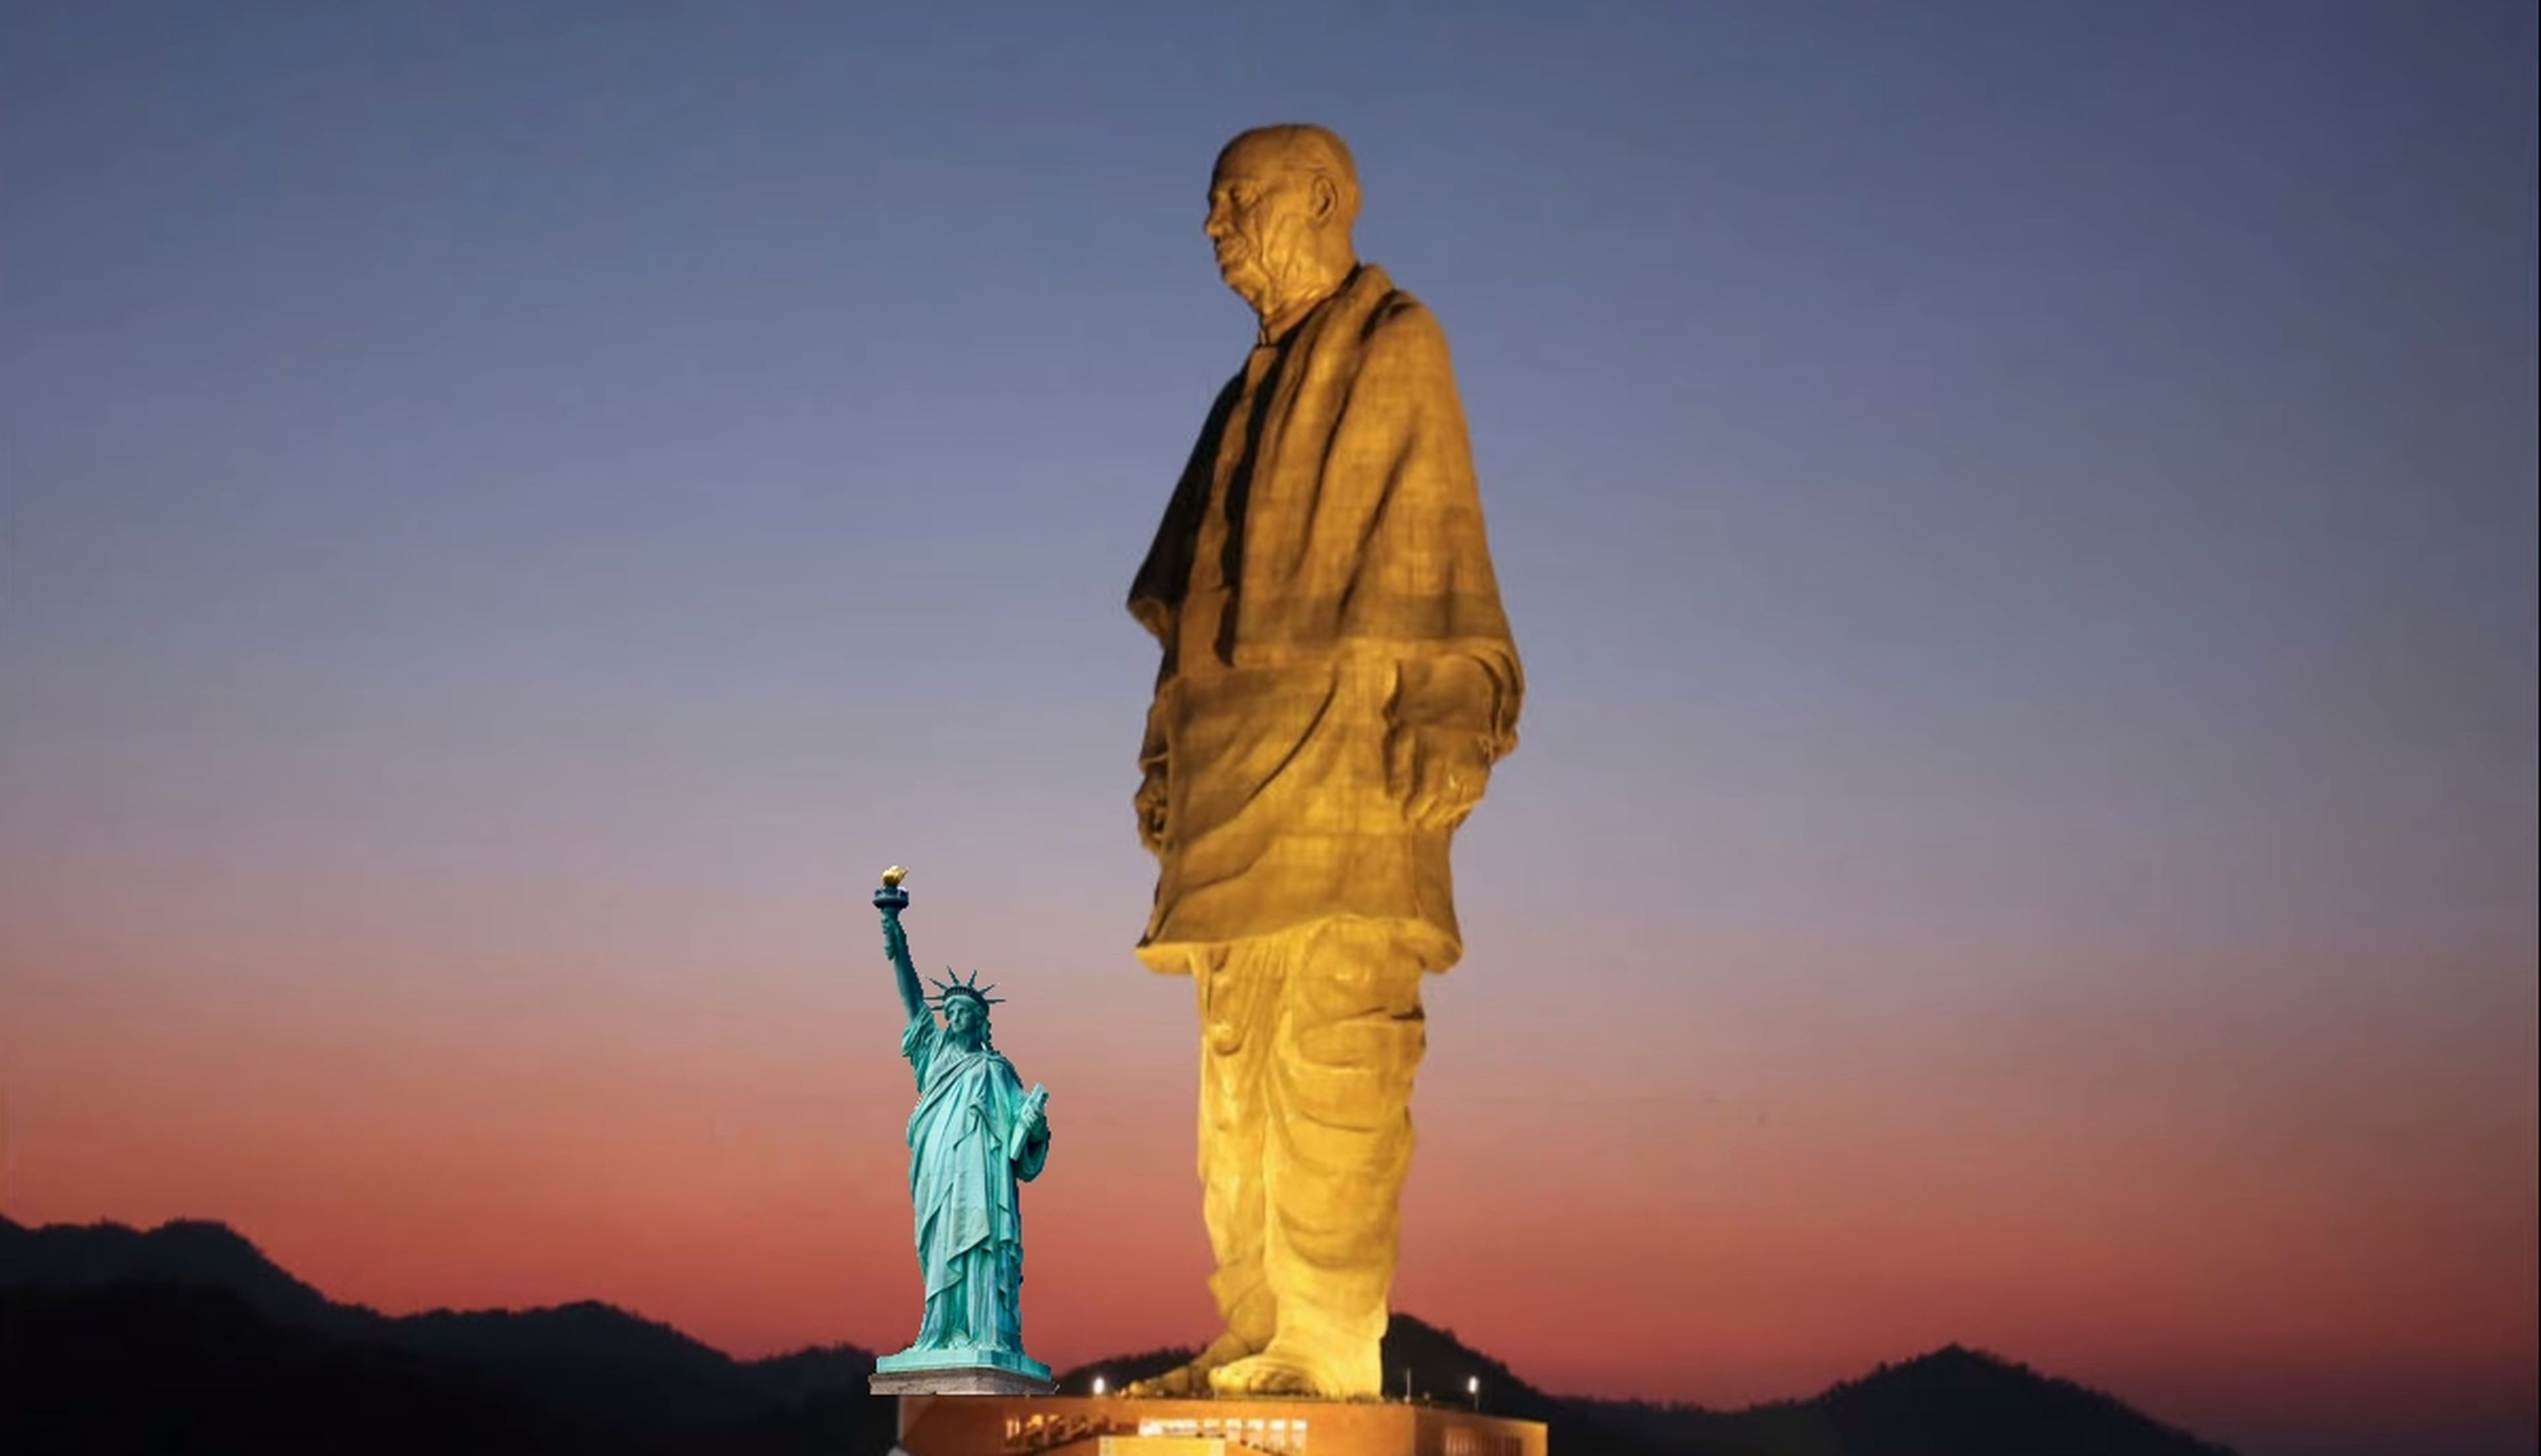 Así se construyó la estatua más alta del mundo, dobla en altura a la Estatua de la Libertad